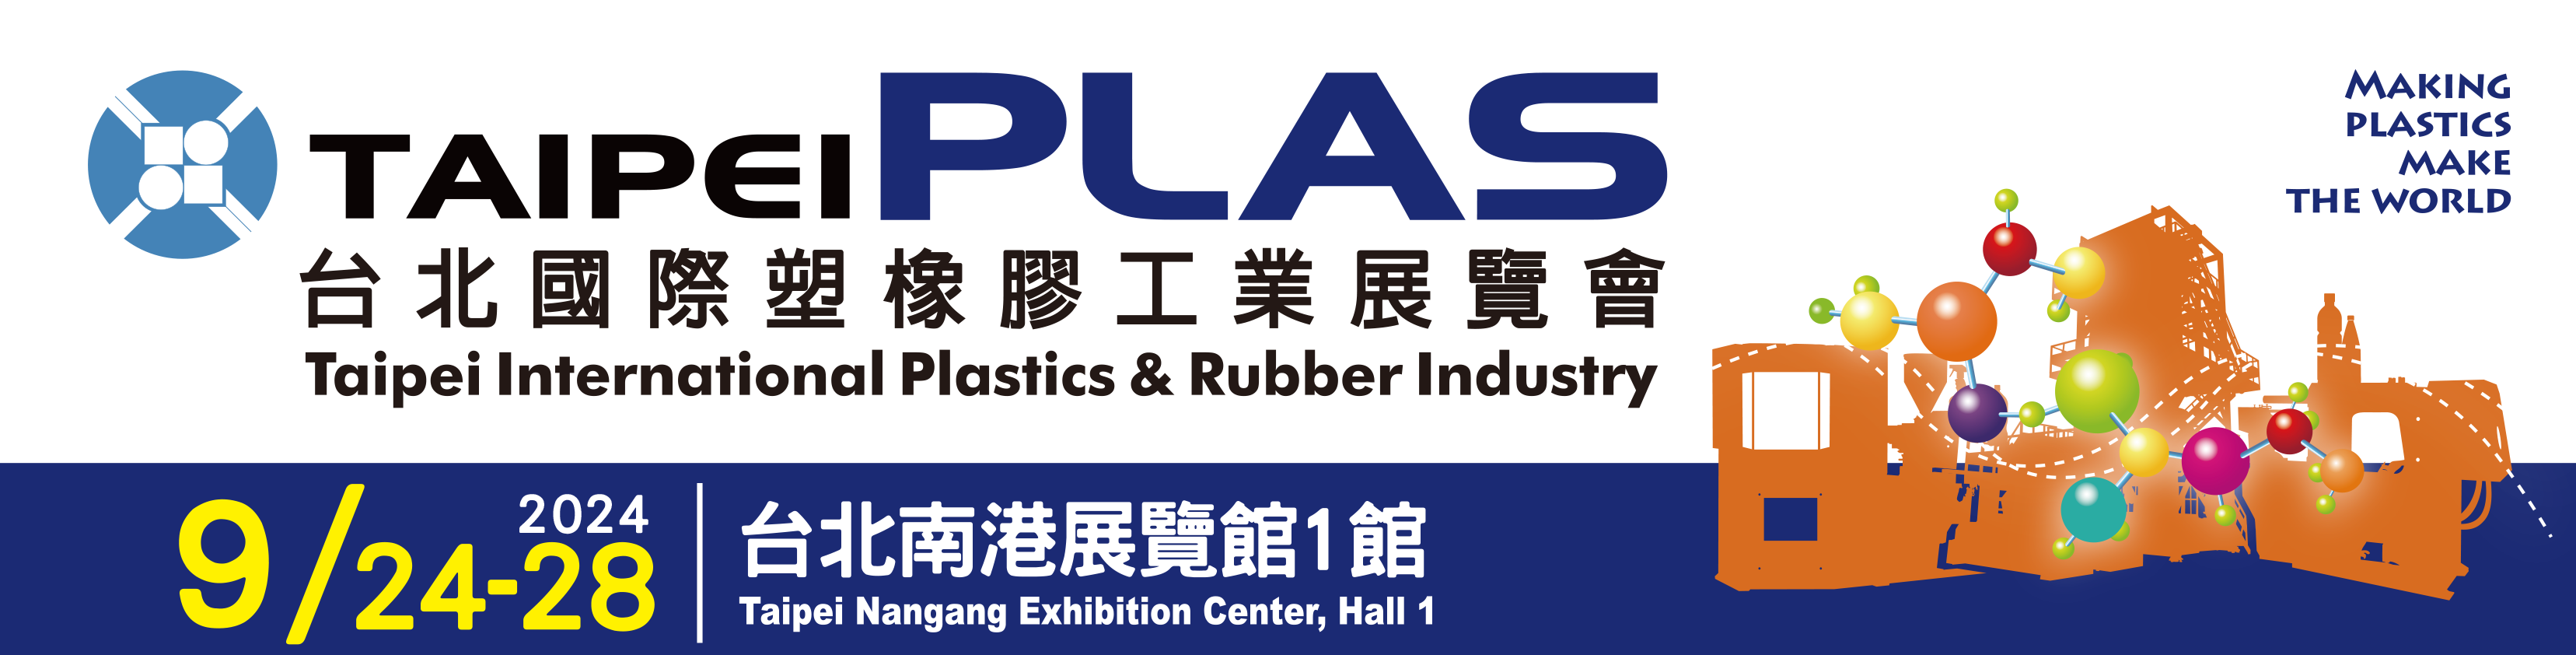 2024 TAIPEI PLAS 台北國際塑橡膠工業展